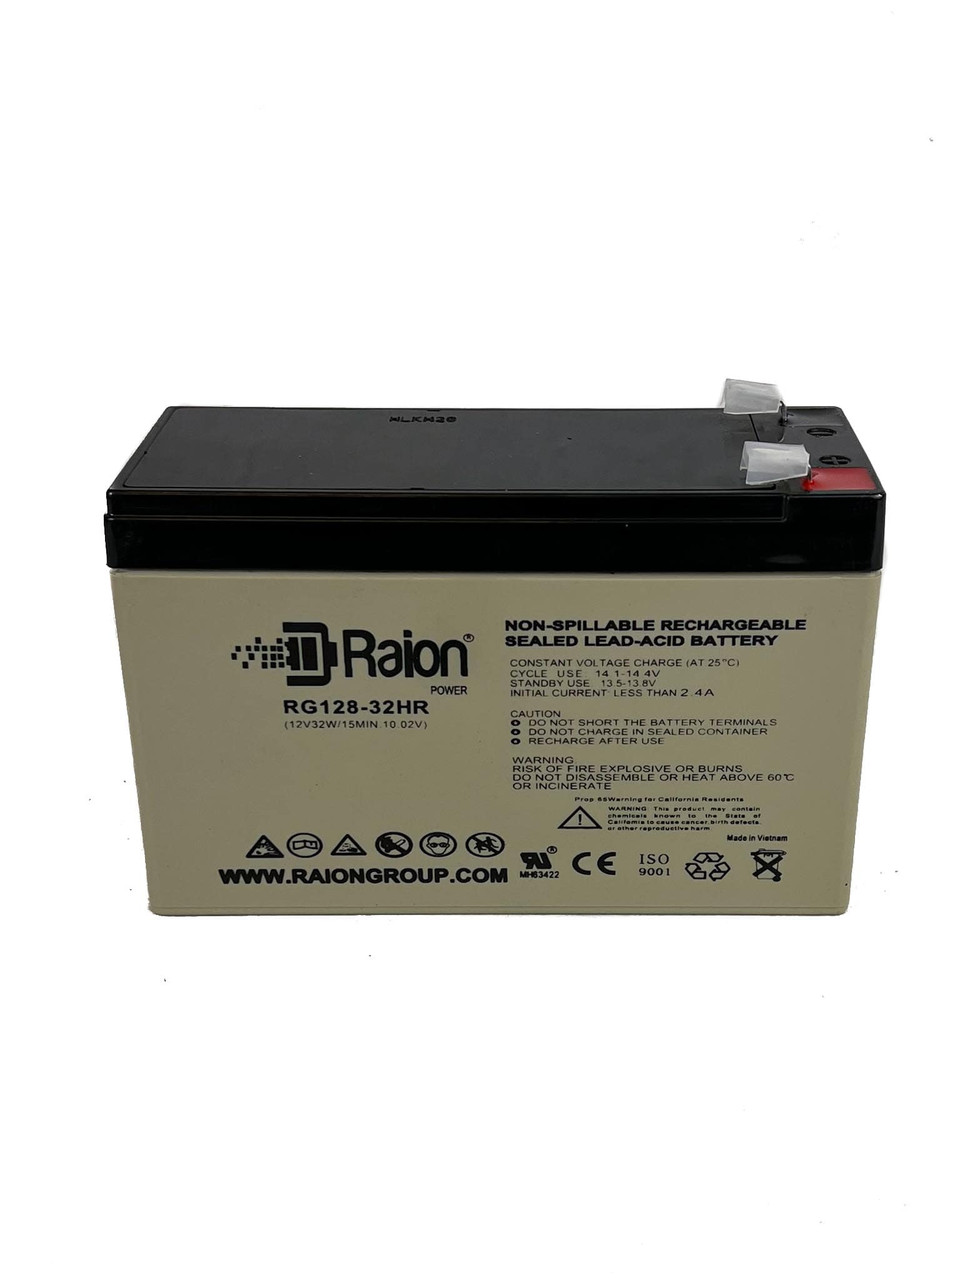 Raion Power RG128-32HR Replacement High Rate Battery Cartridge for Tripp Lite BCINTERNET 450